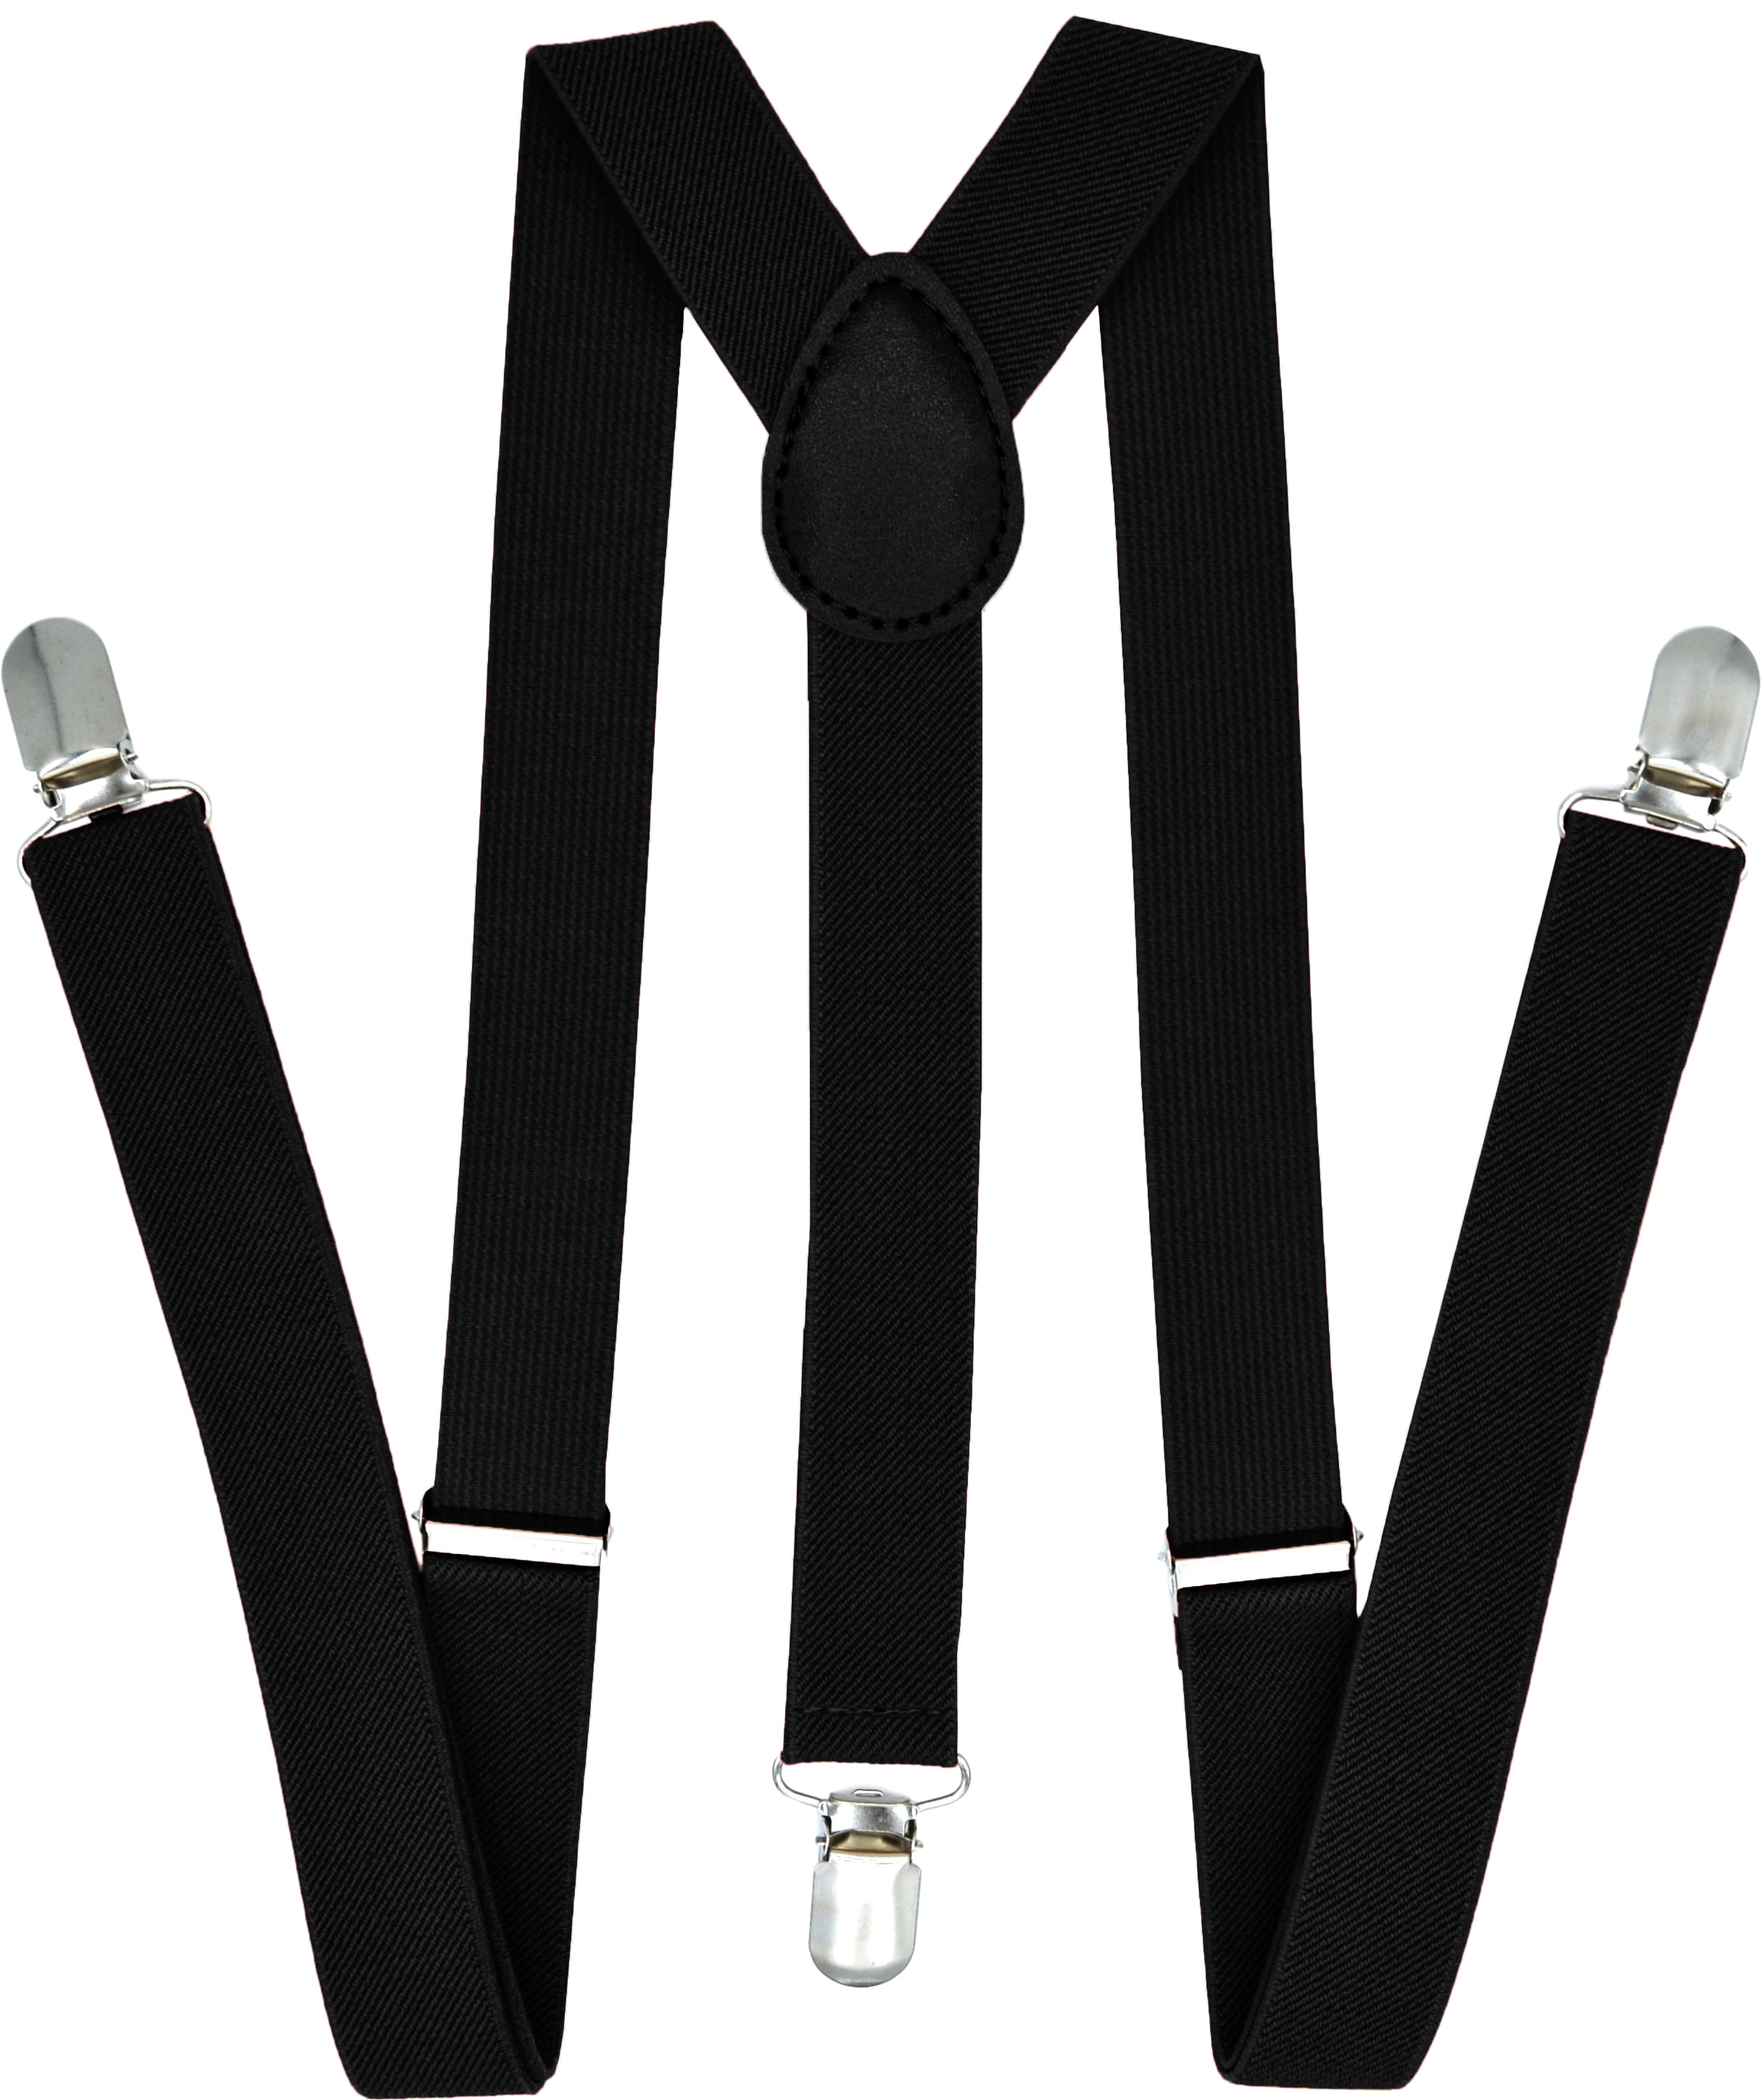 Details about   1:6 Black Suit Set Clothes Tie for Side Show 12 Inch Male Figure Accessories